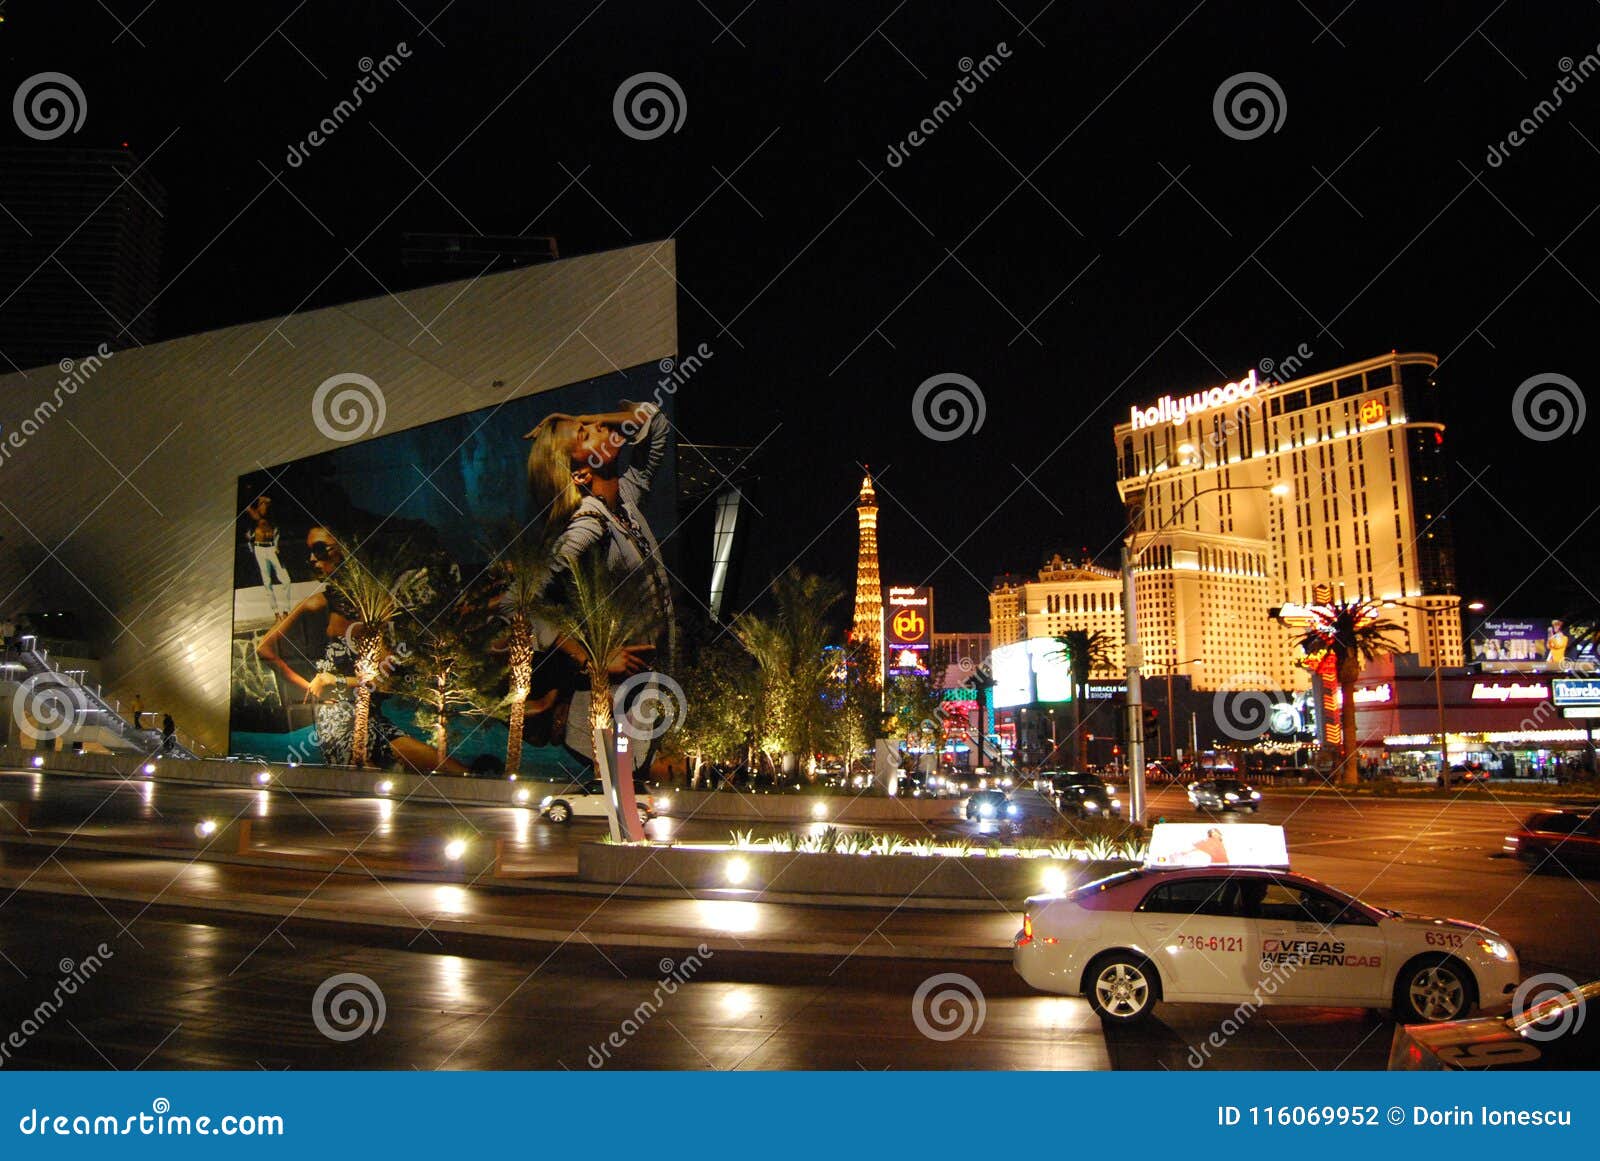 Las Vegas Strip, The Strip, Paris Las Vegas, Las Vegas Strip, McCarran International Airport ...